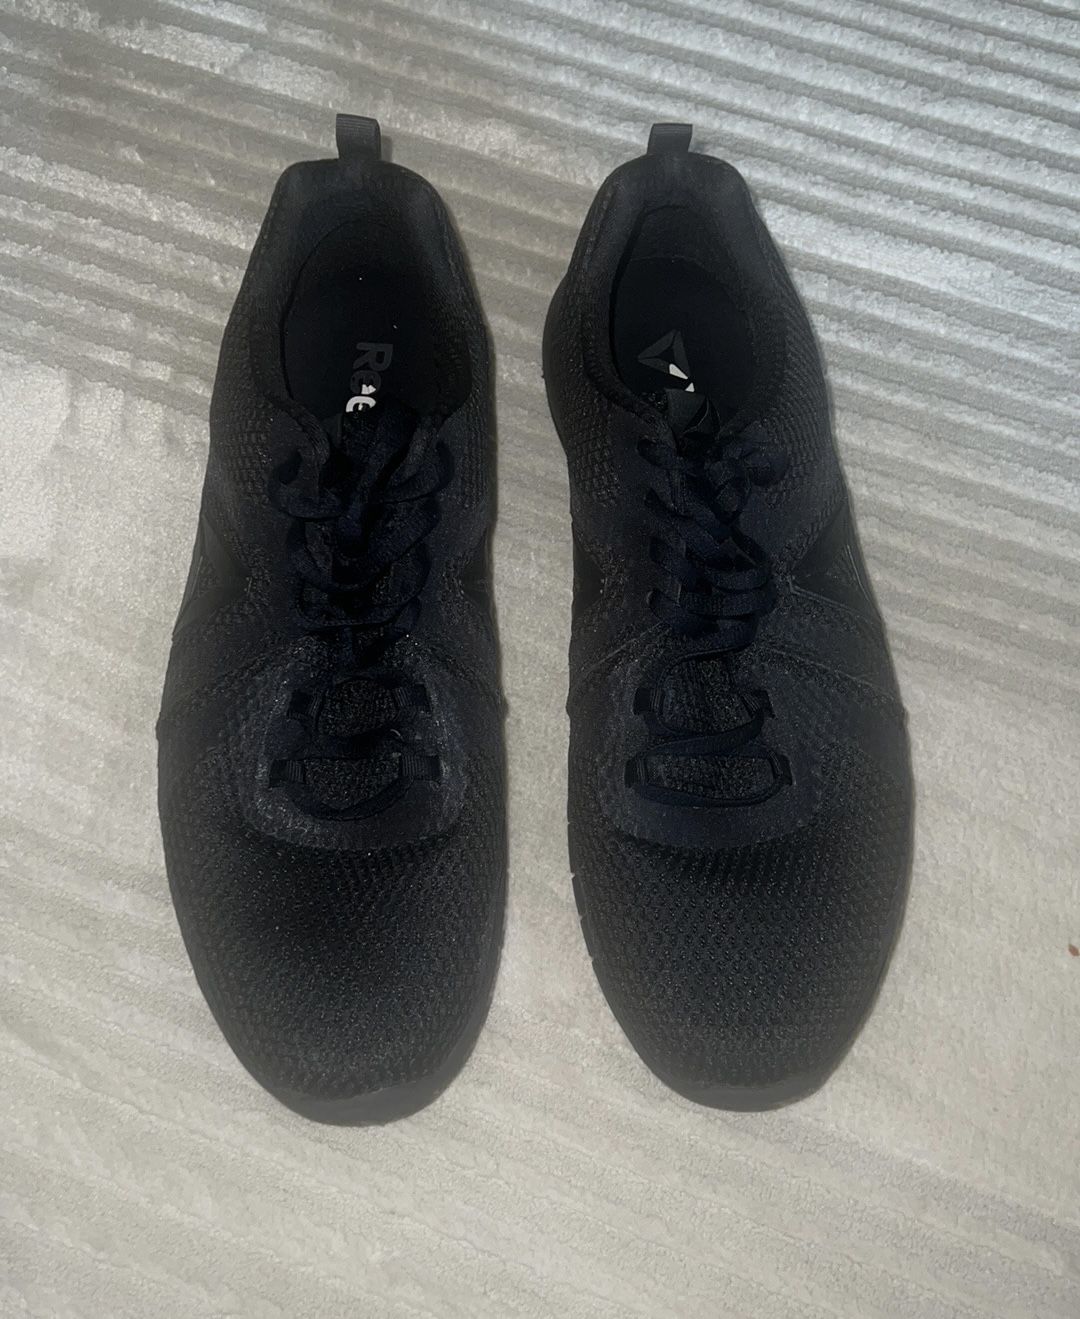 Men’s black reebok sneakers shoes size 11